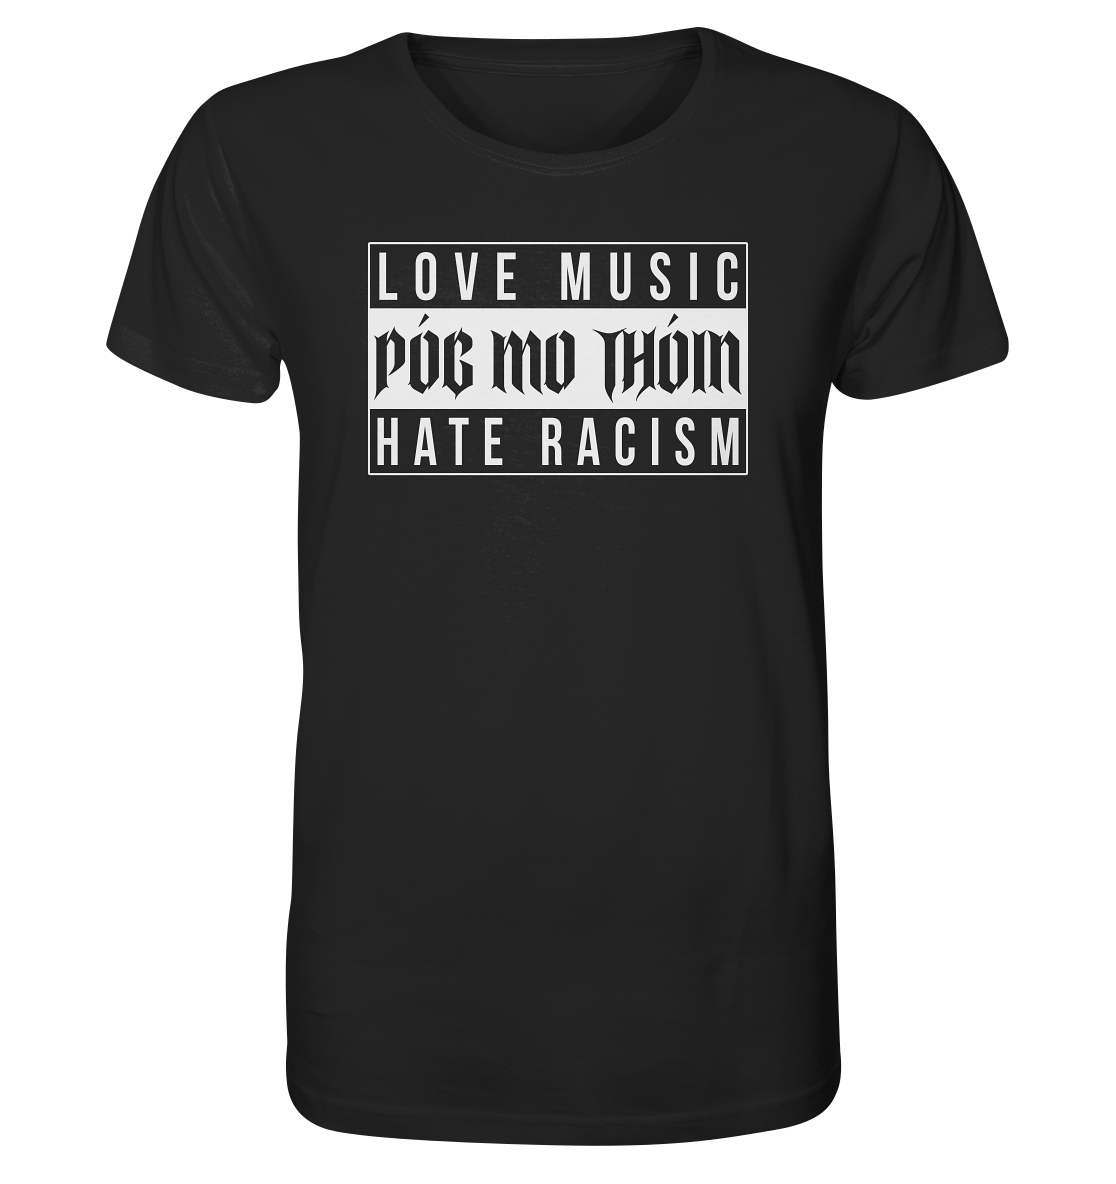 Póg Mo Thóin Streetwear "Love Music Hate Racism" - Organic Shirt